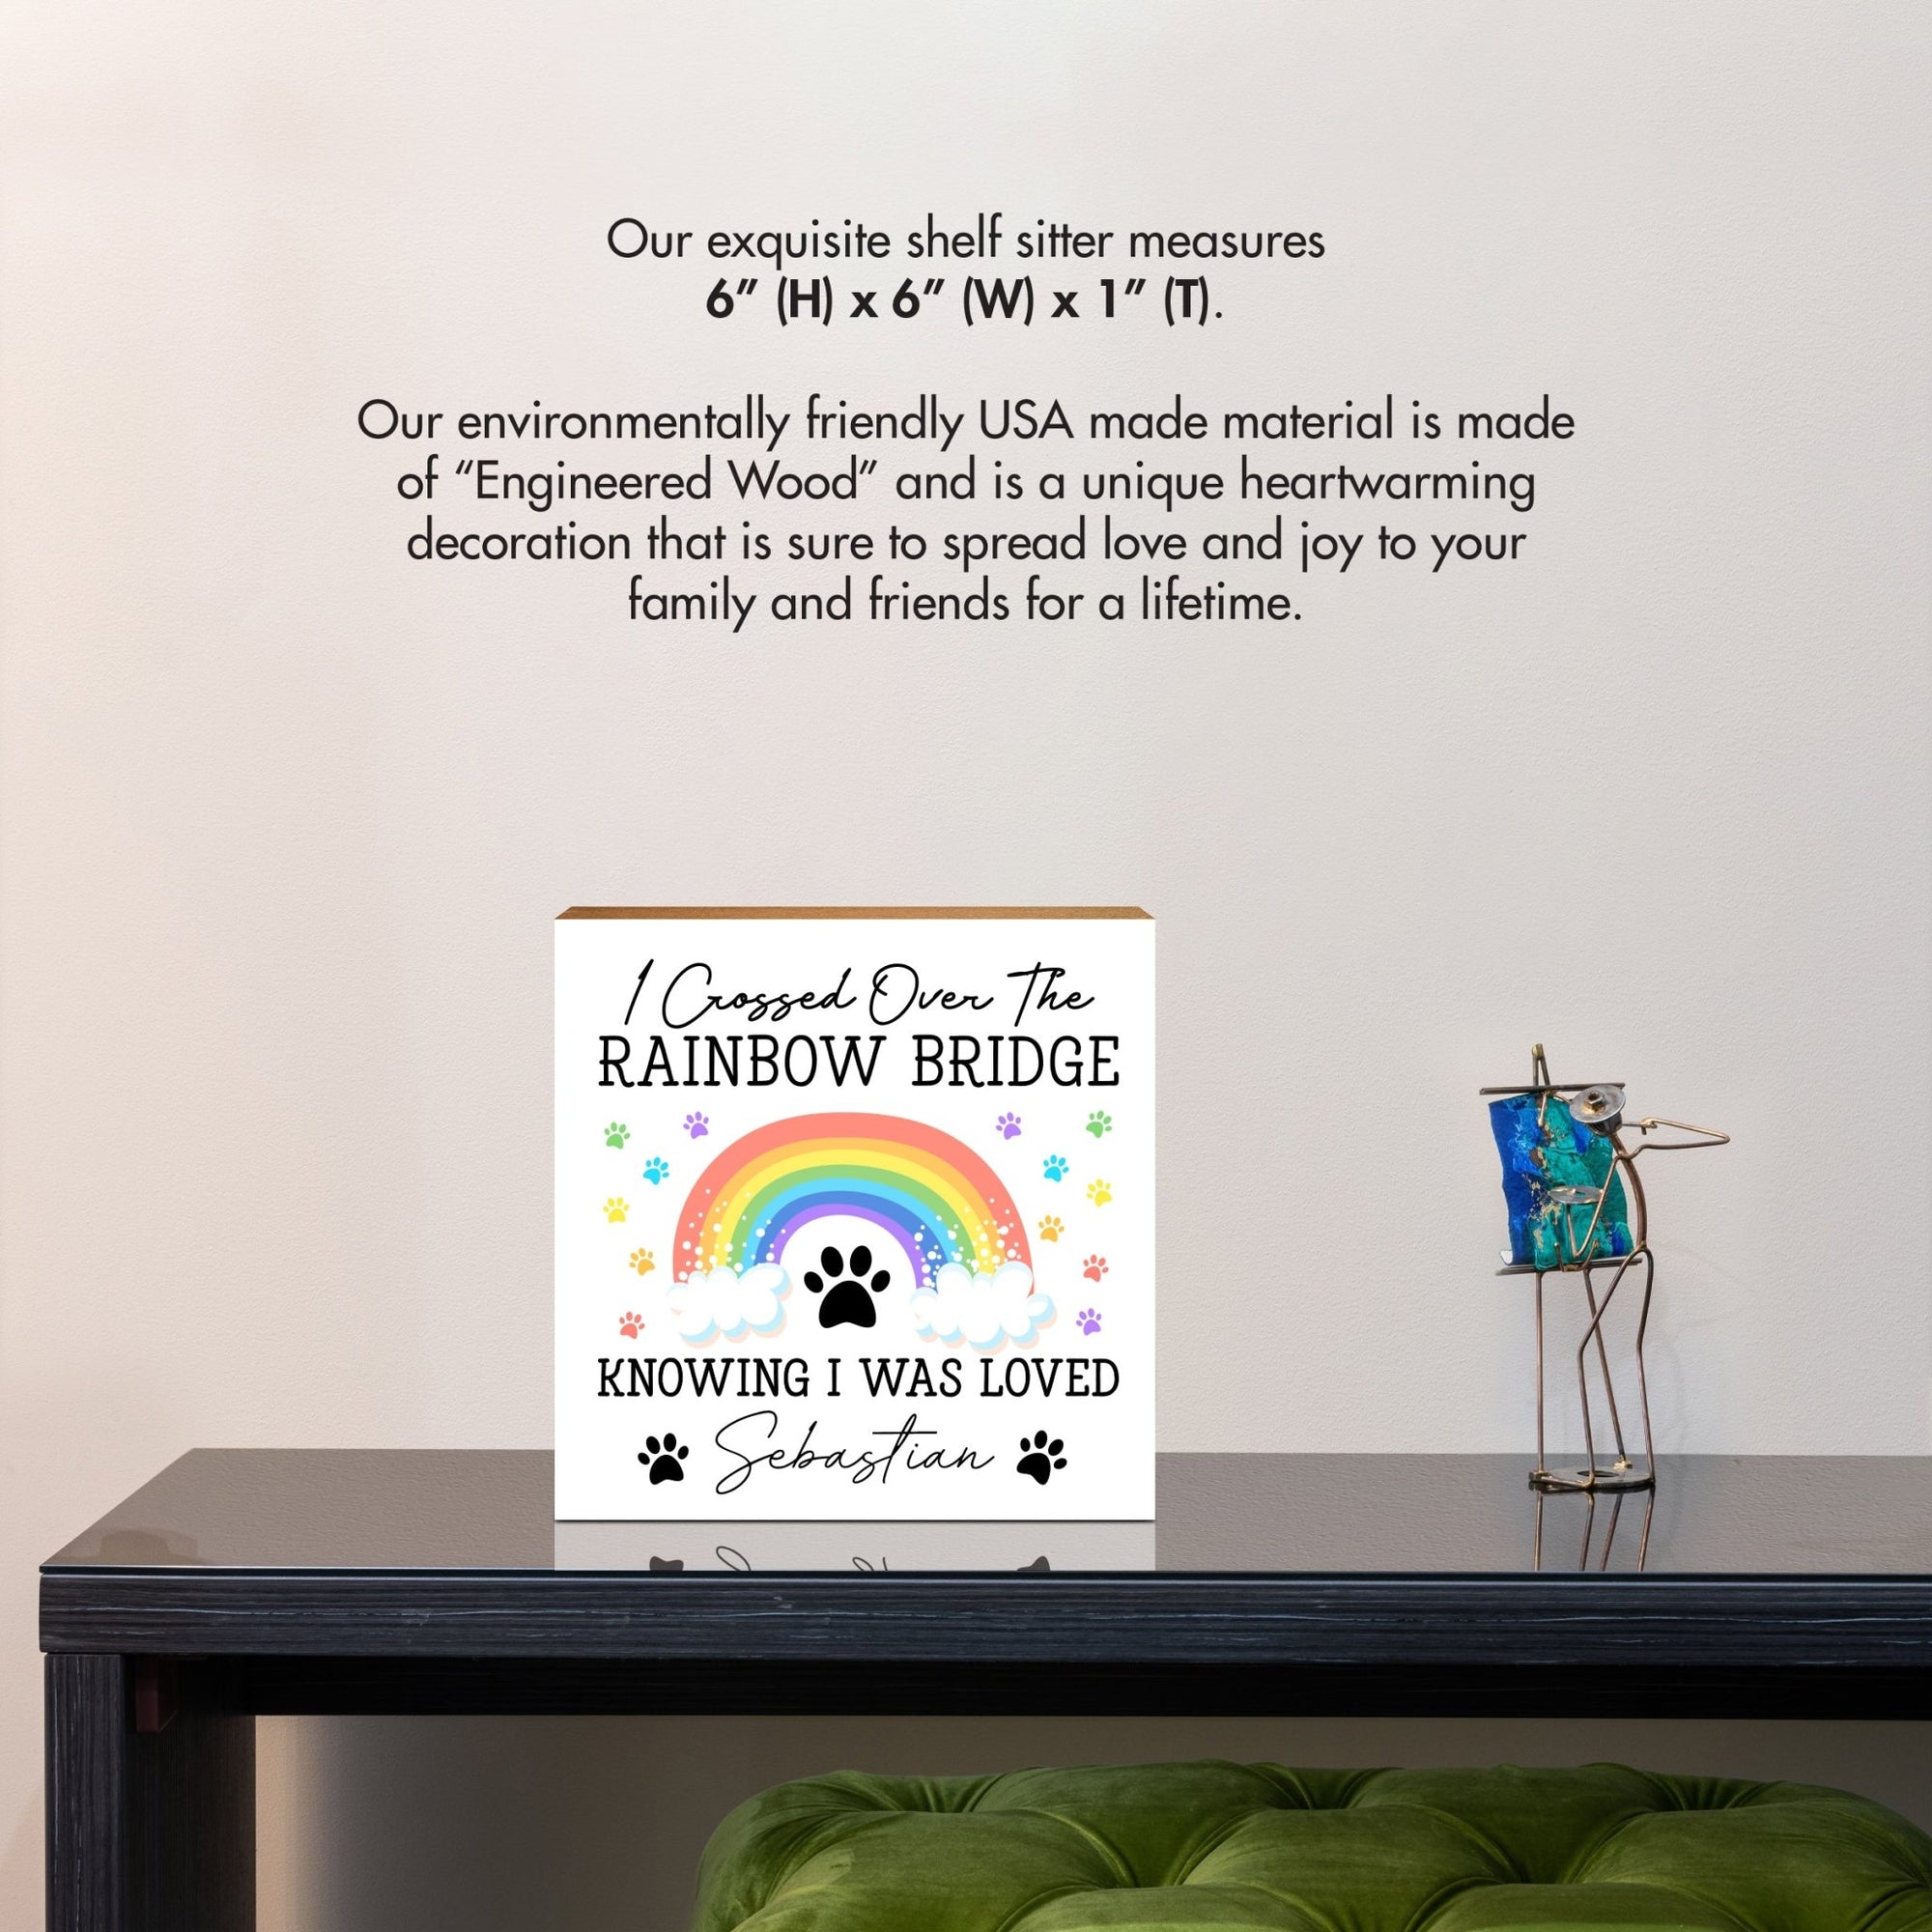 Personalized Pet Memorial Shelf Décor Plaque - I Crossed The Rainbow Bridge - LifeSong Milestones